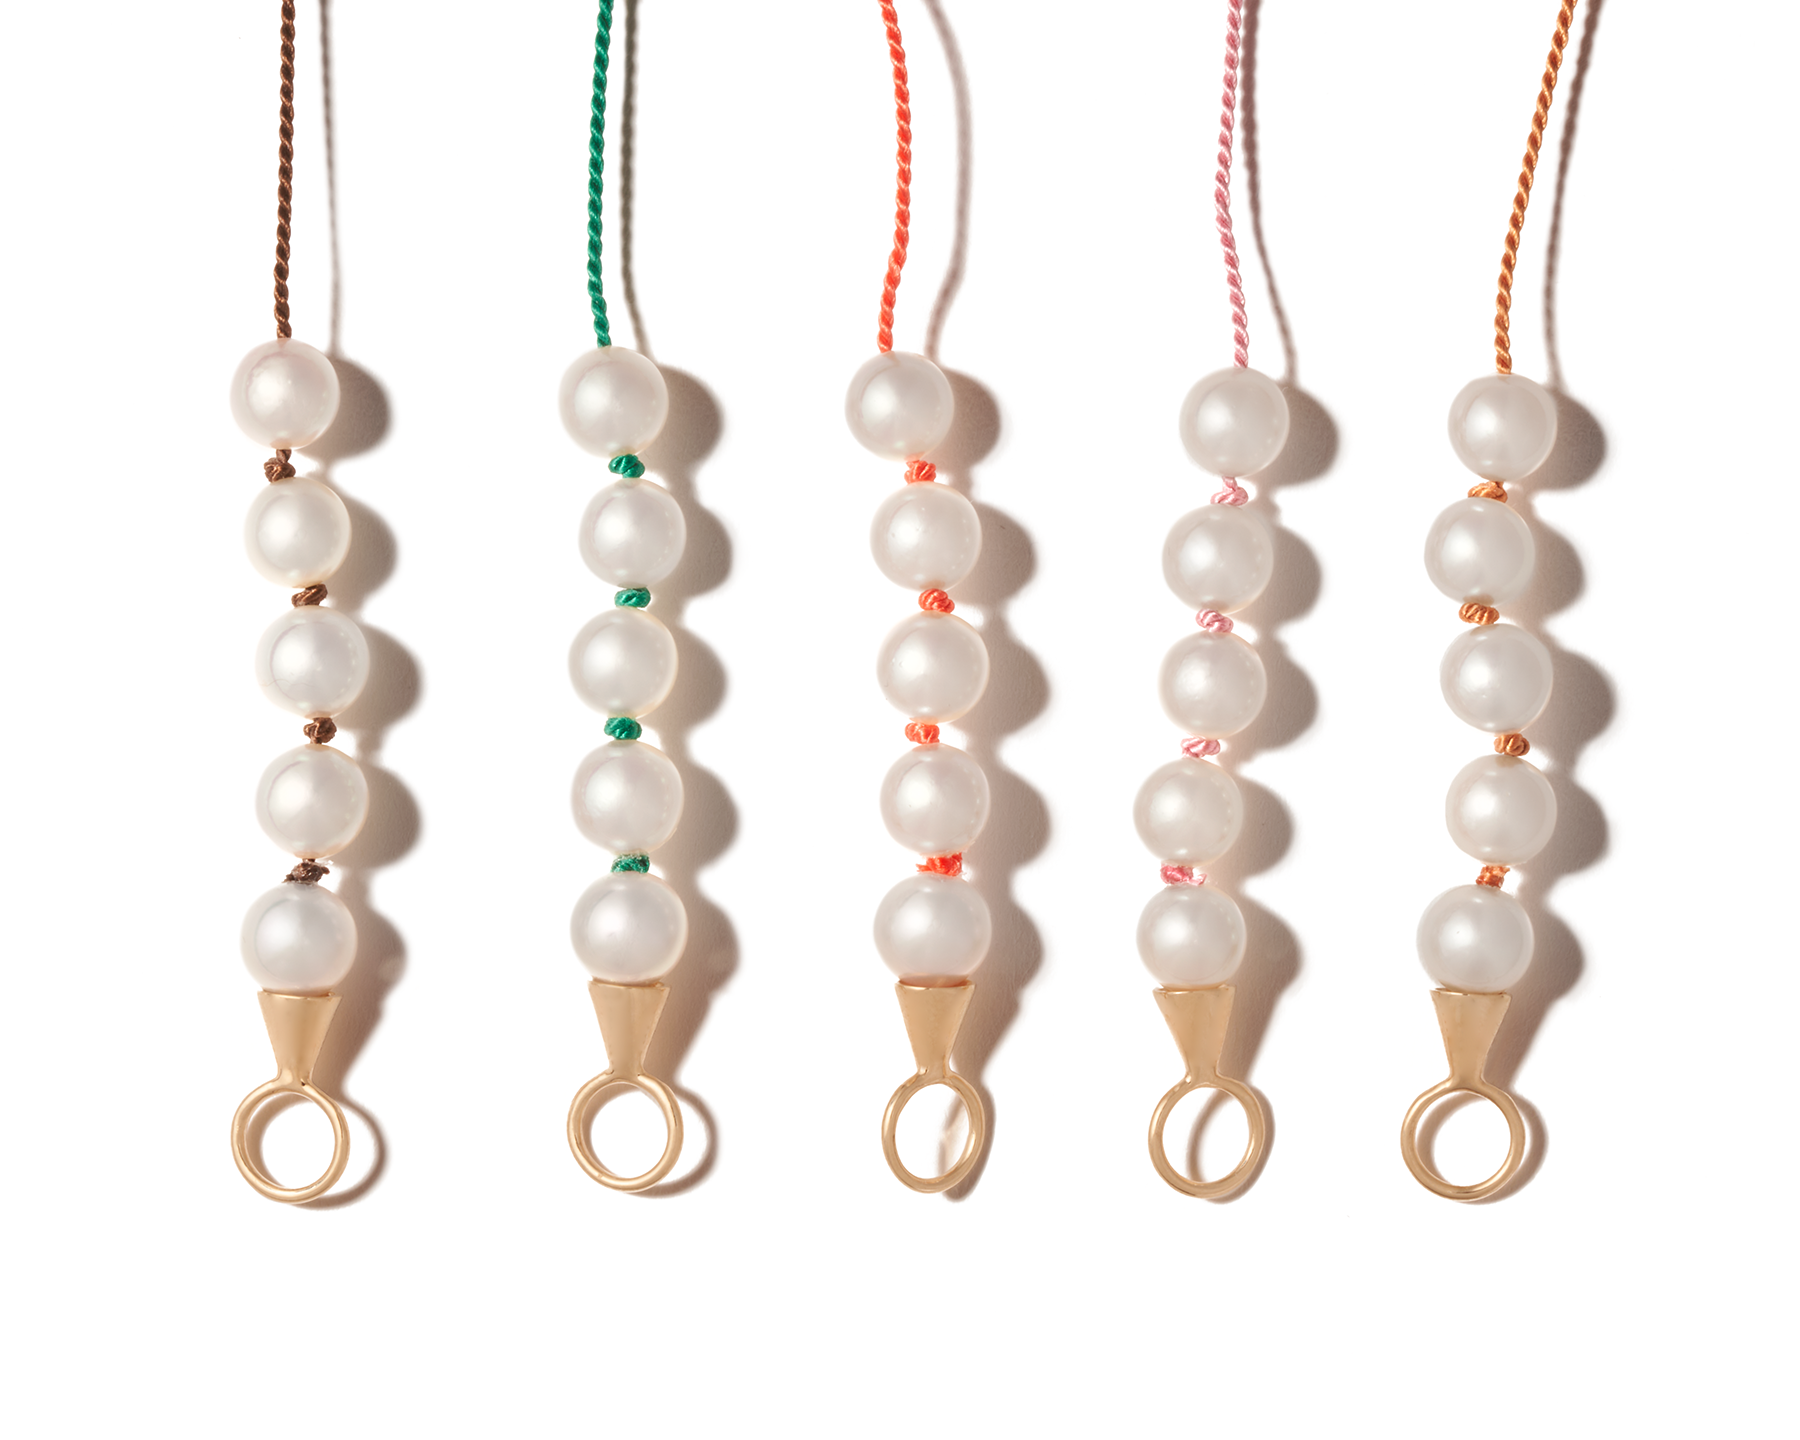 Your Pearls, Reimagined in Original Loops